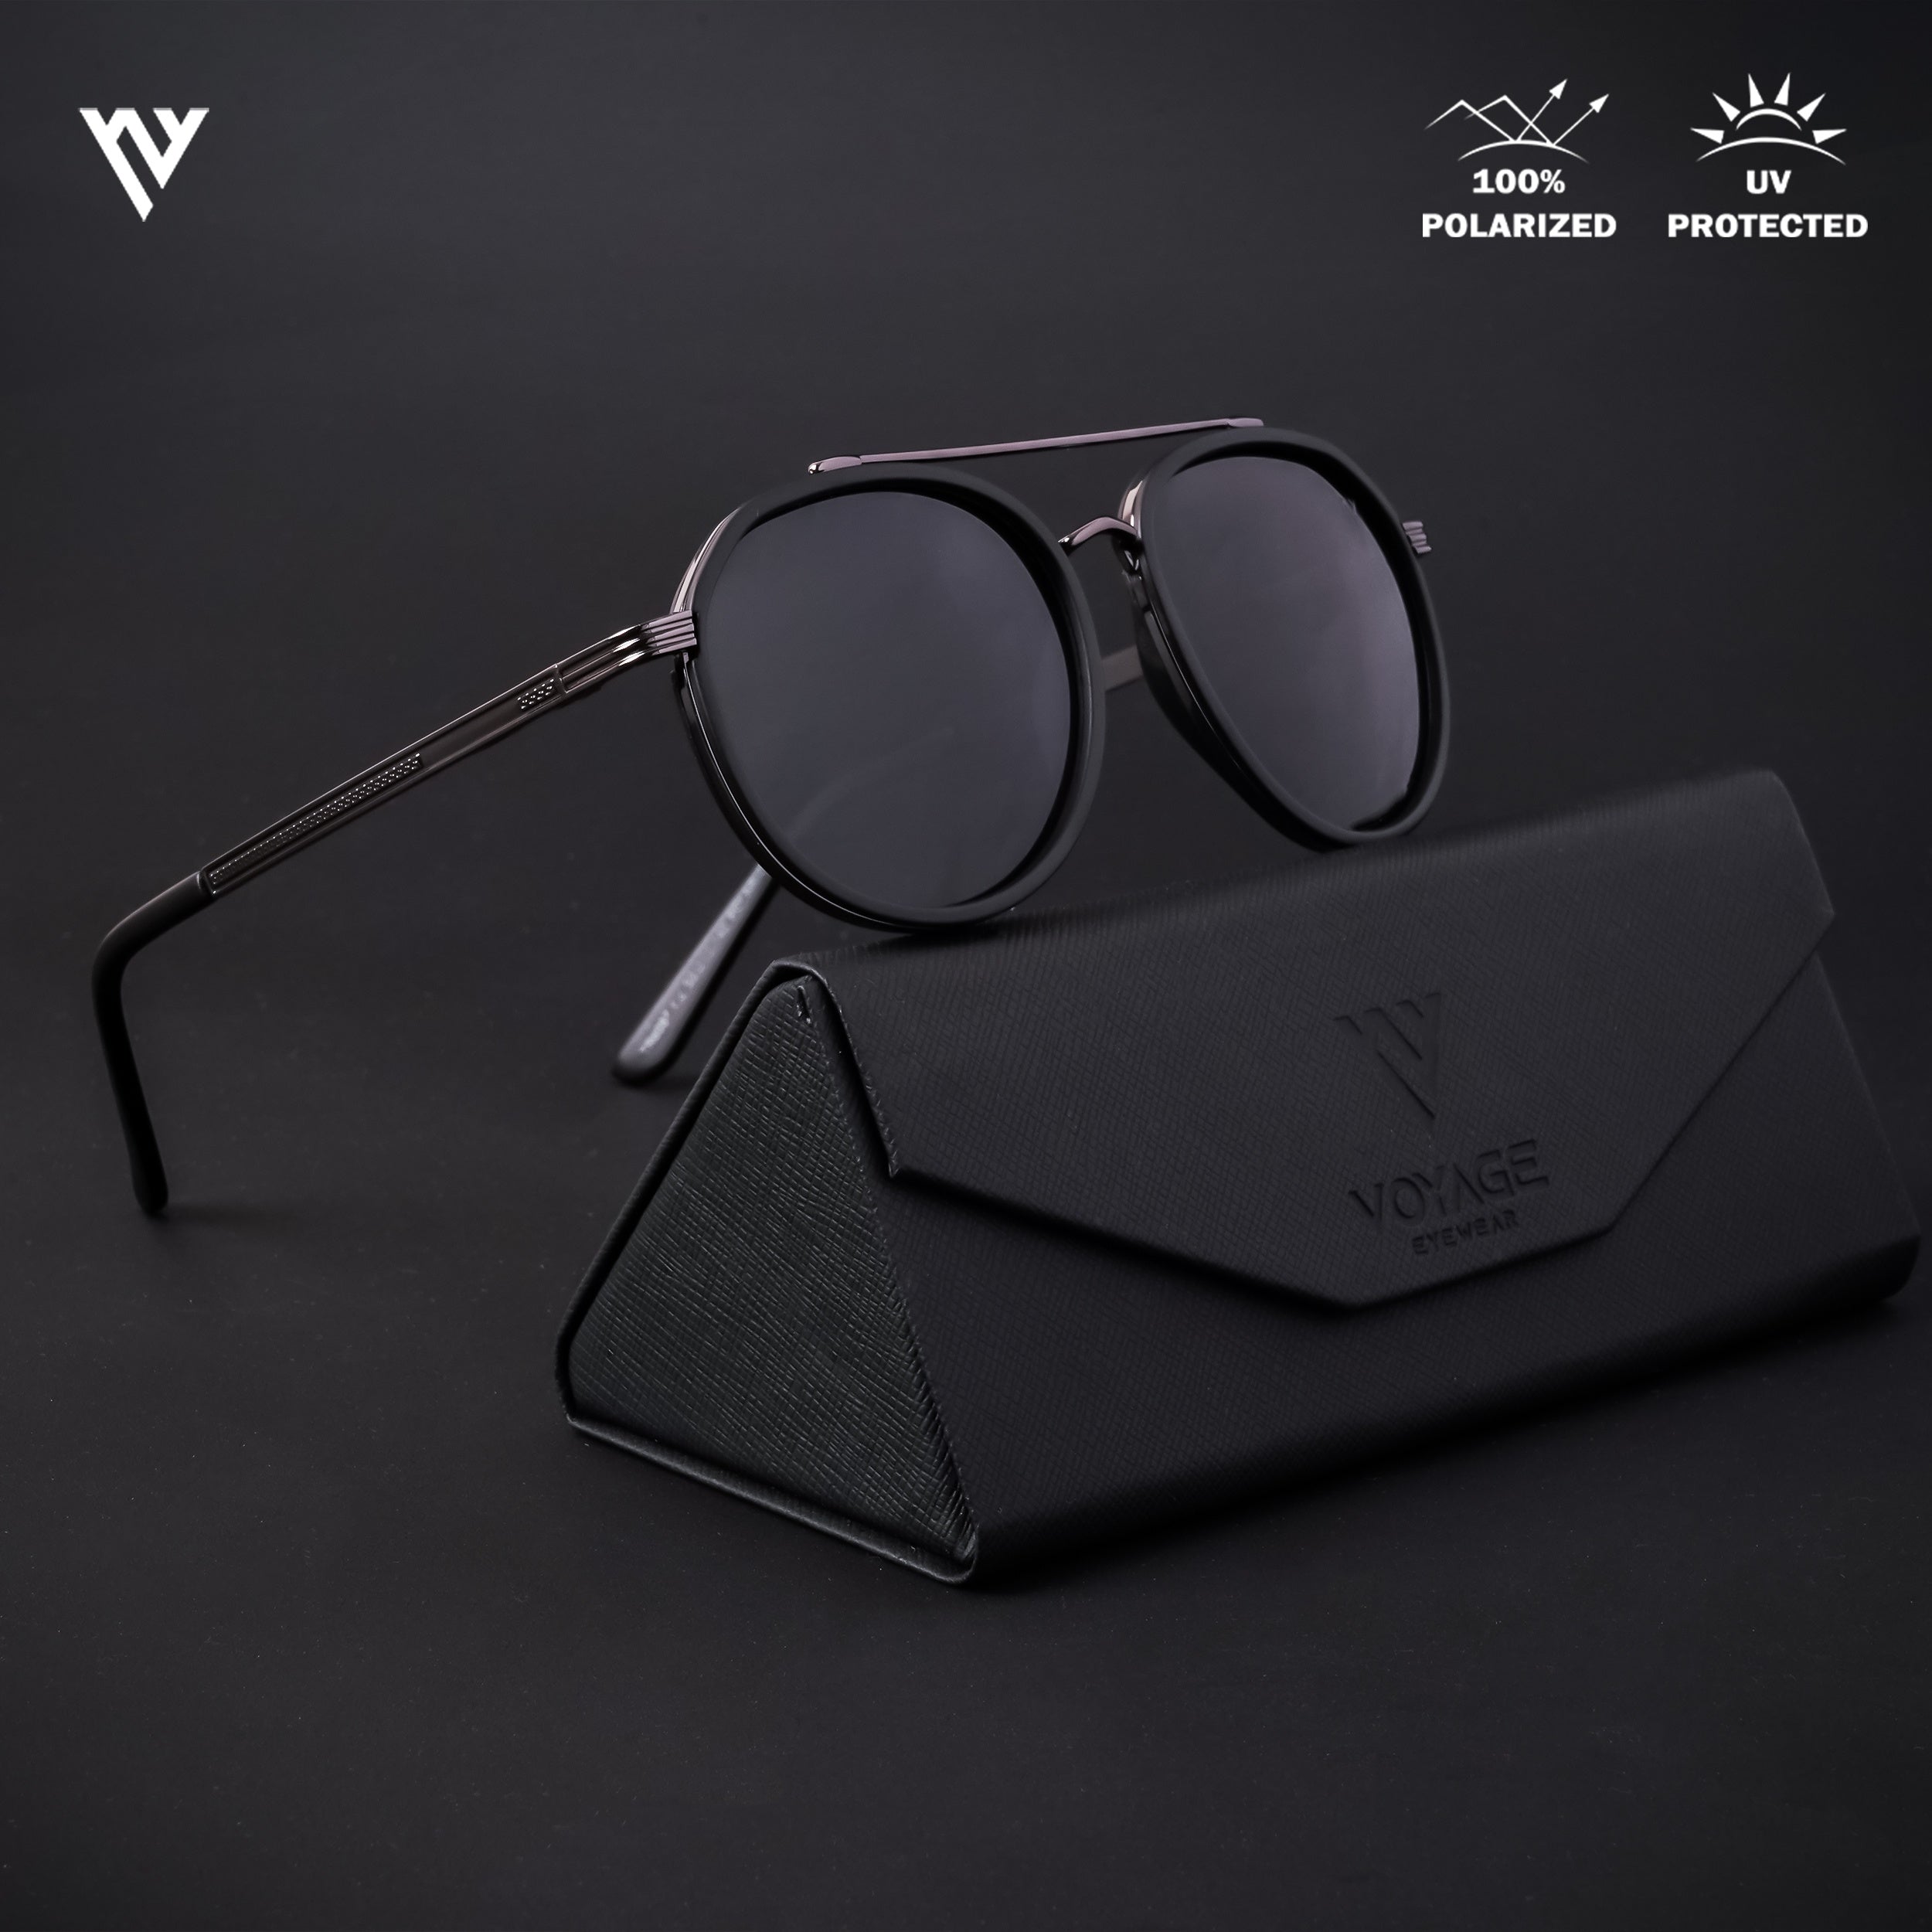 Voyage Exclusive Grey & Black Polarized Round Sunglasses for Men & Women - PMG4310